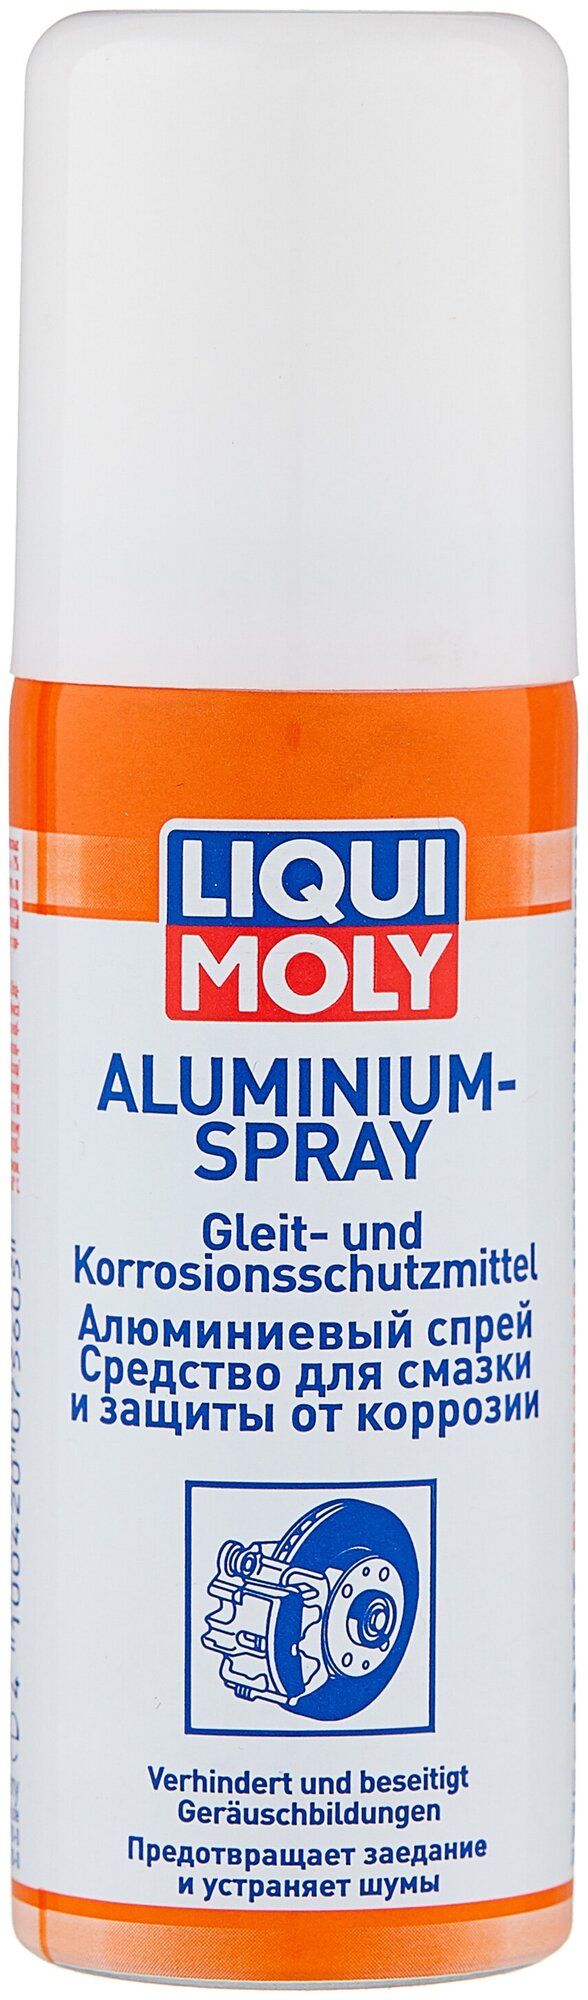 7560 Aluminium-Spray    0.05 .